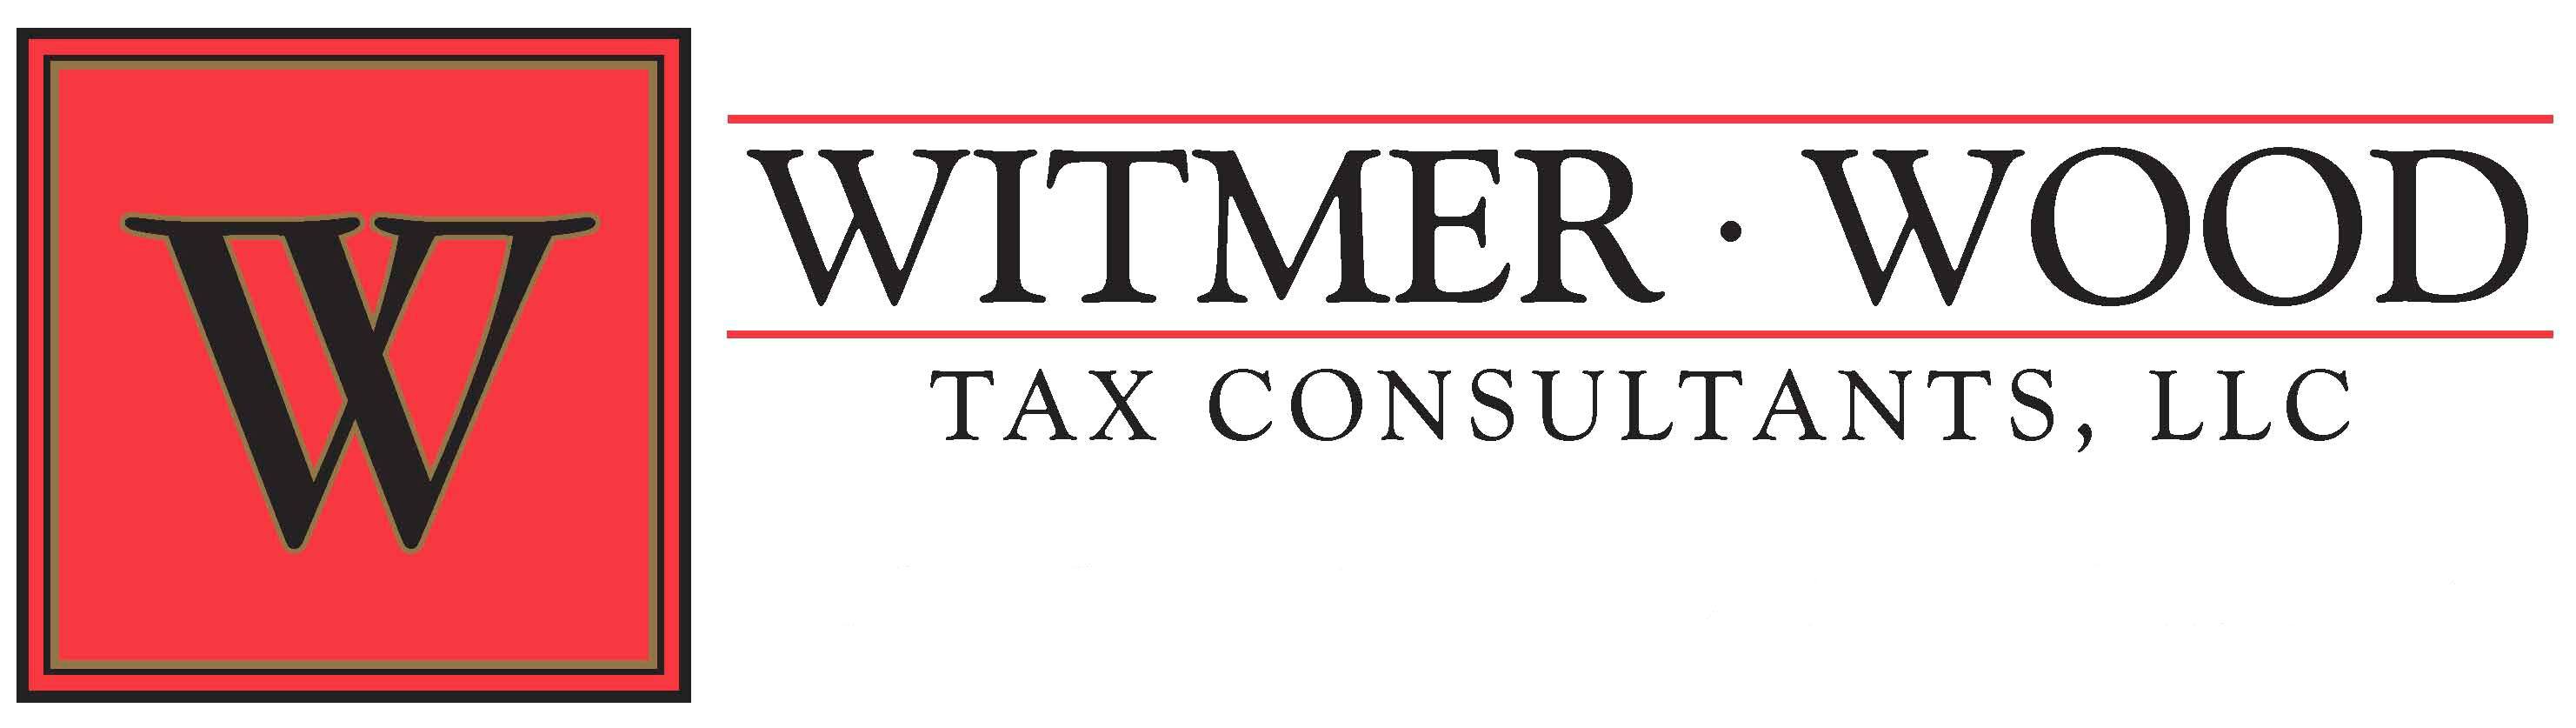 Witmer Wood Tax Consultants, LLC